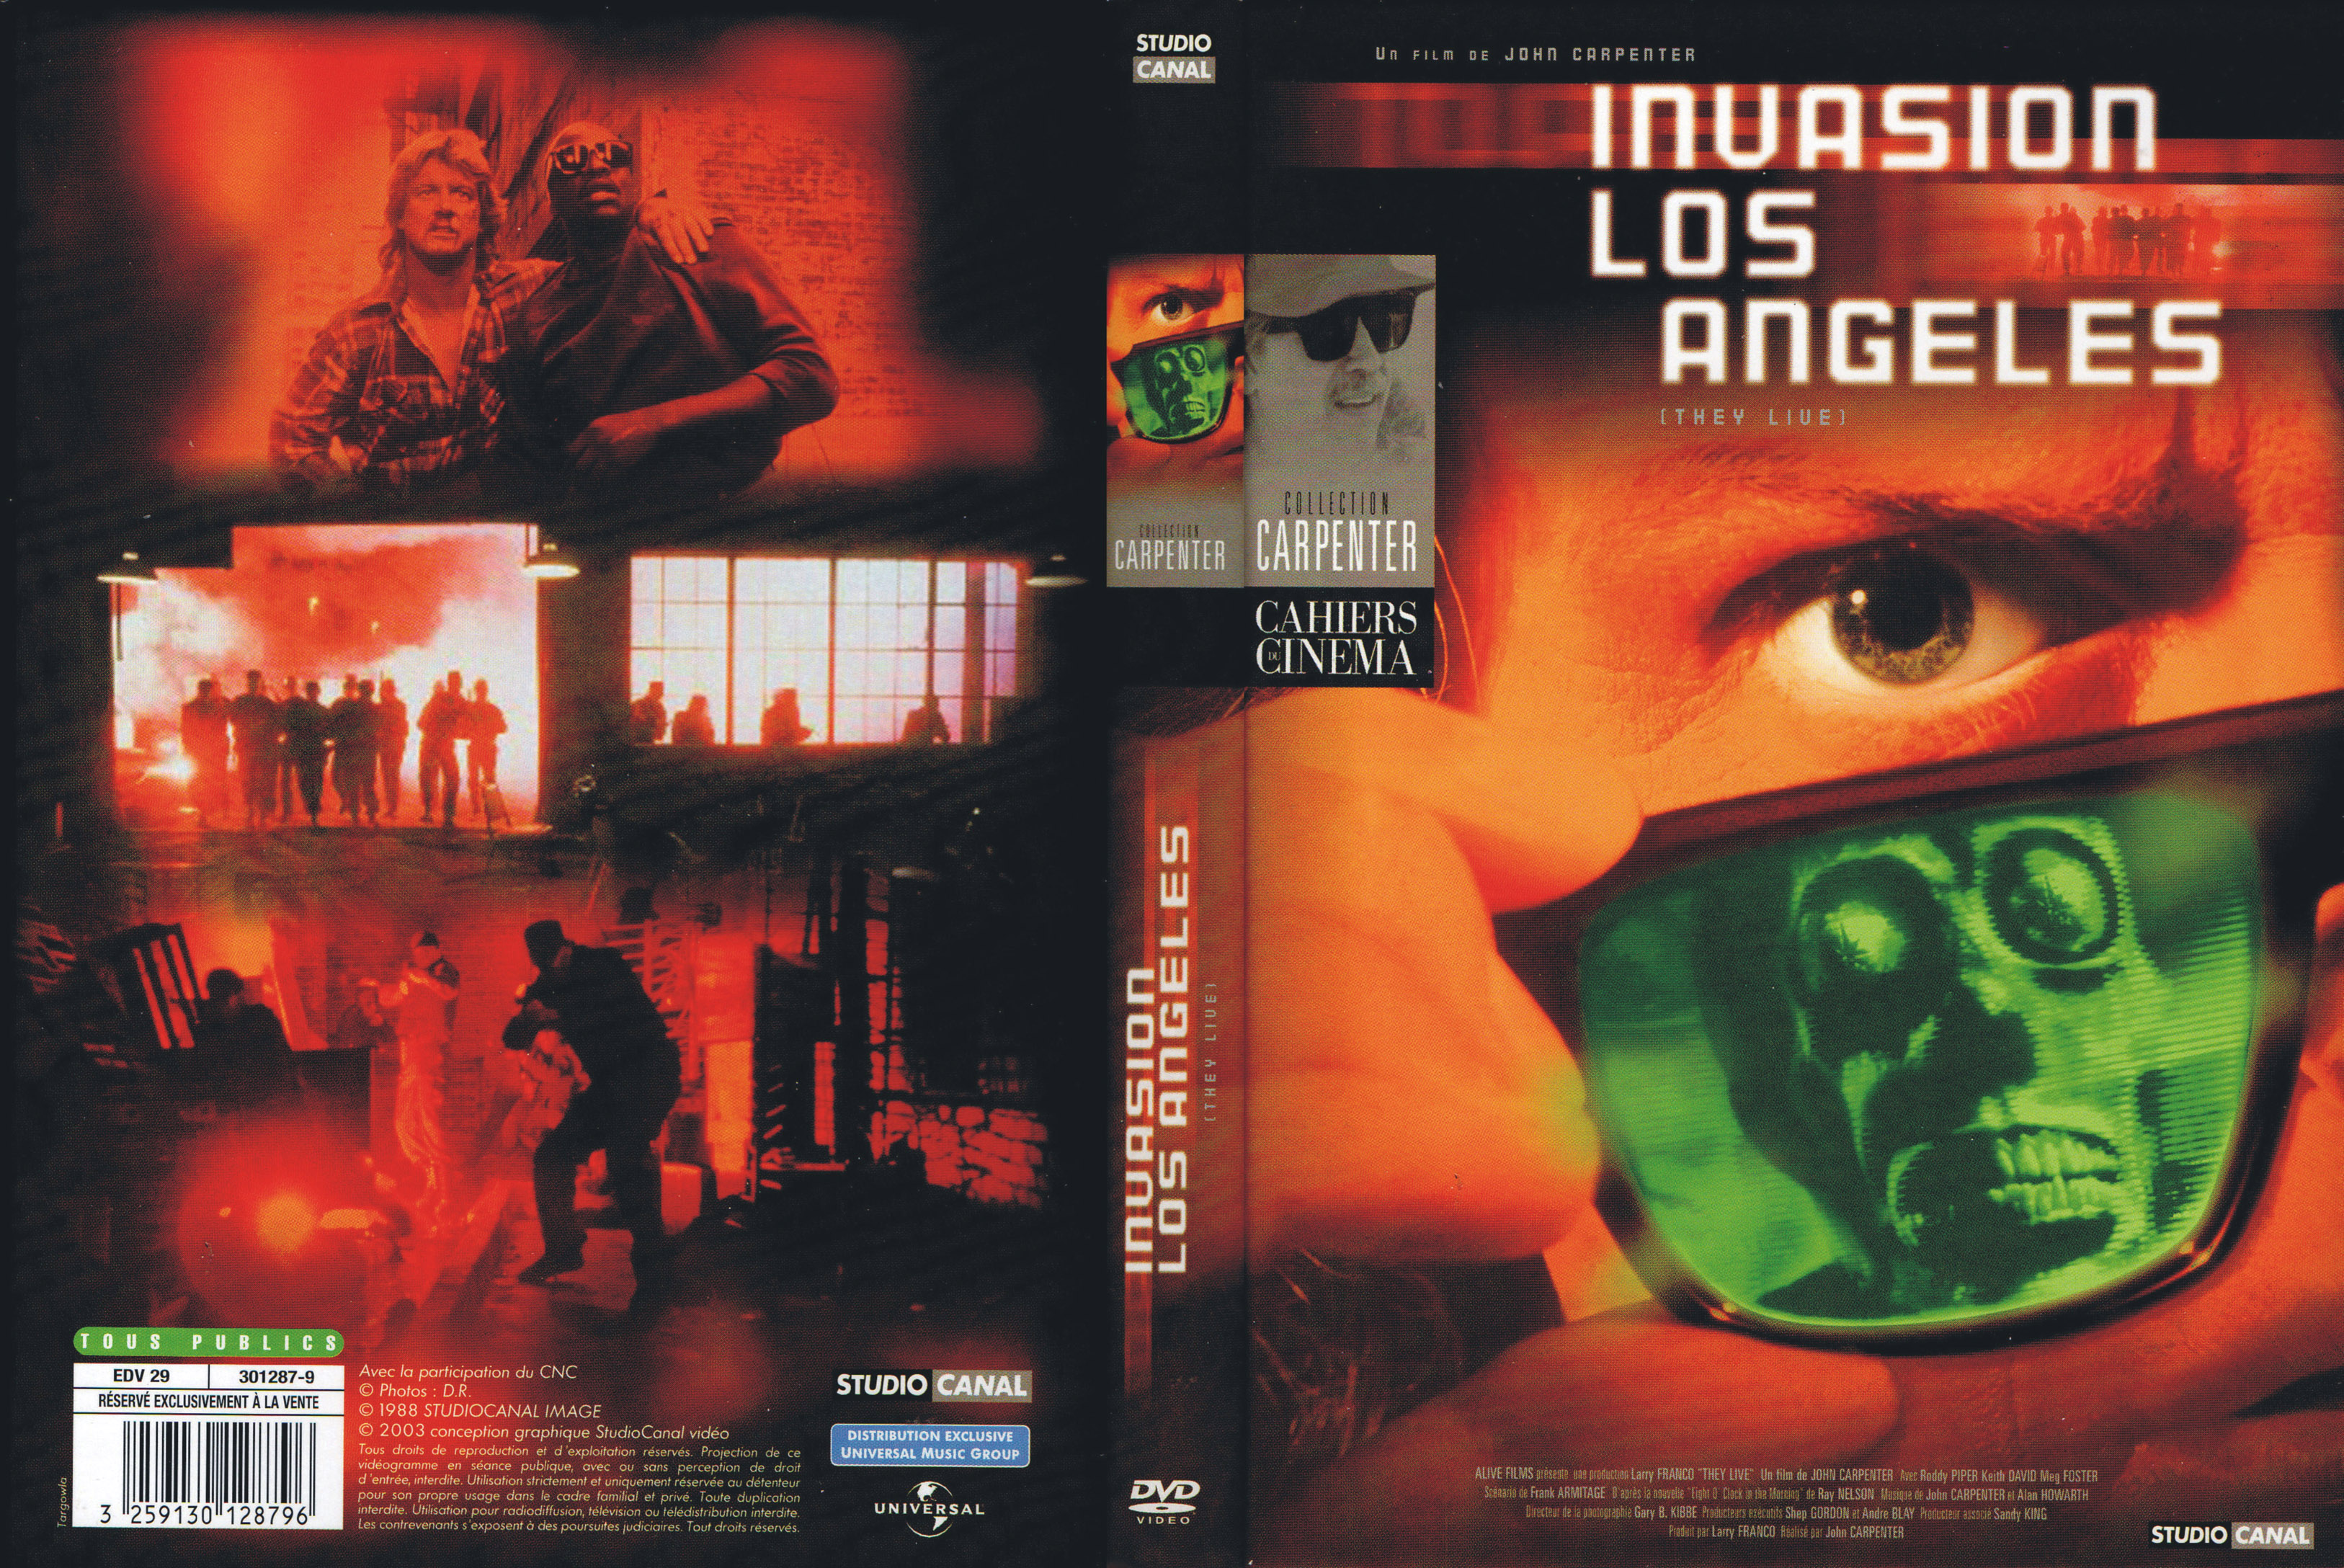 Jaquette DVD Invasion Los Angeles v2